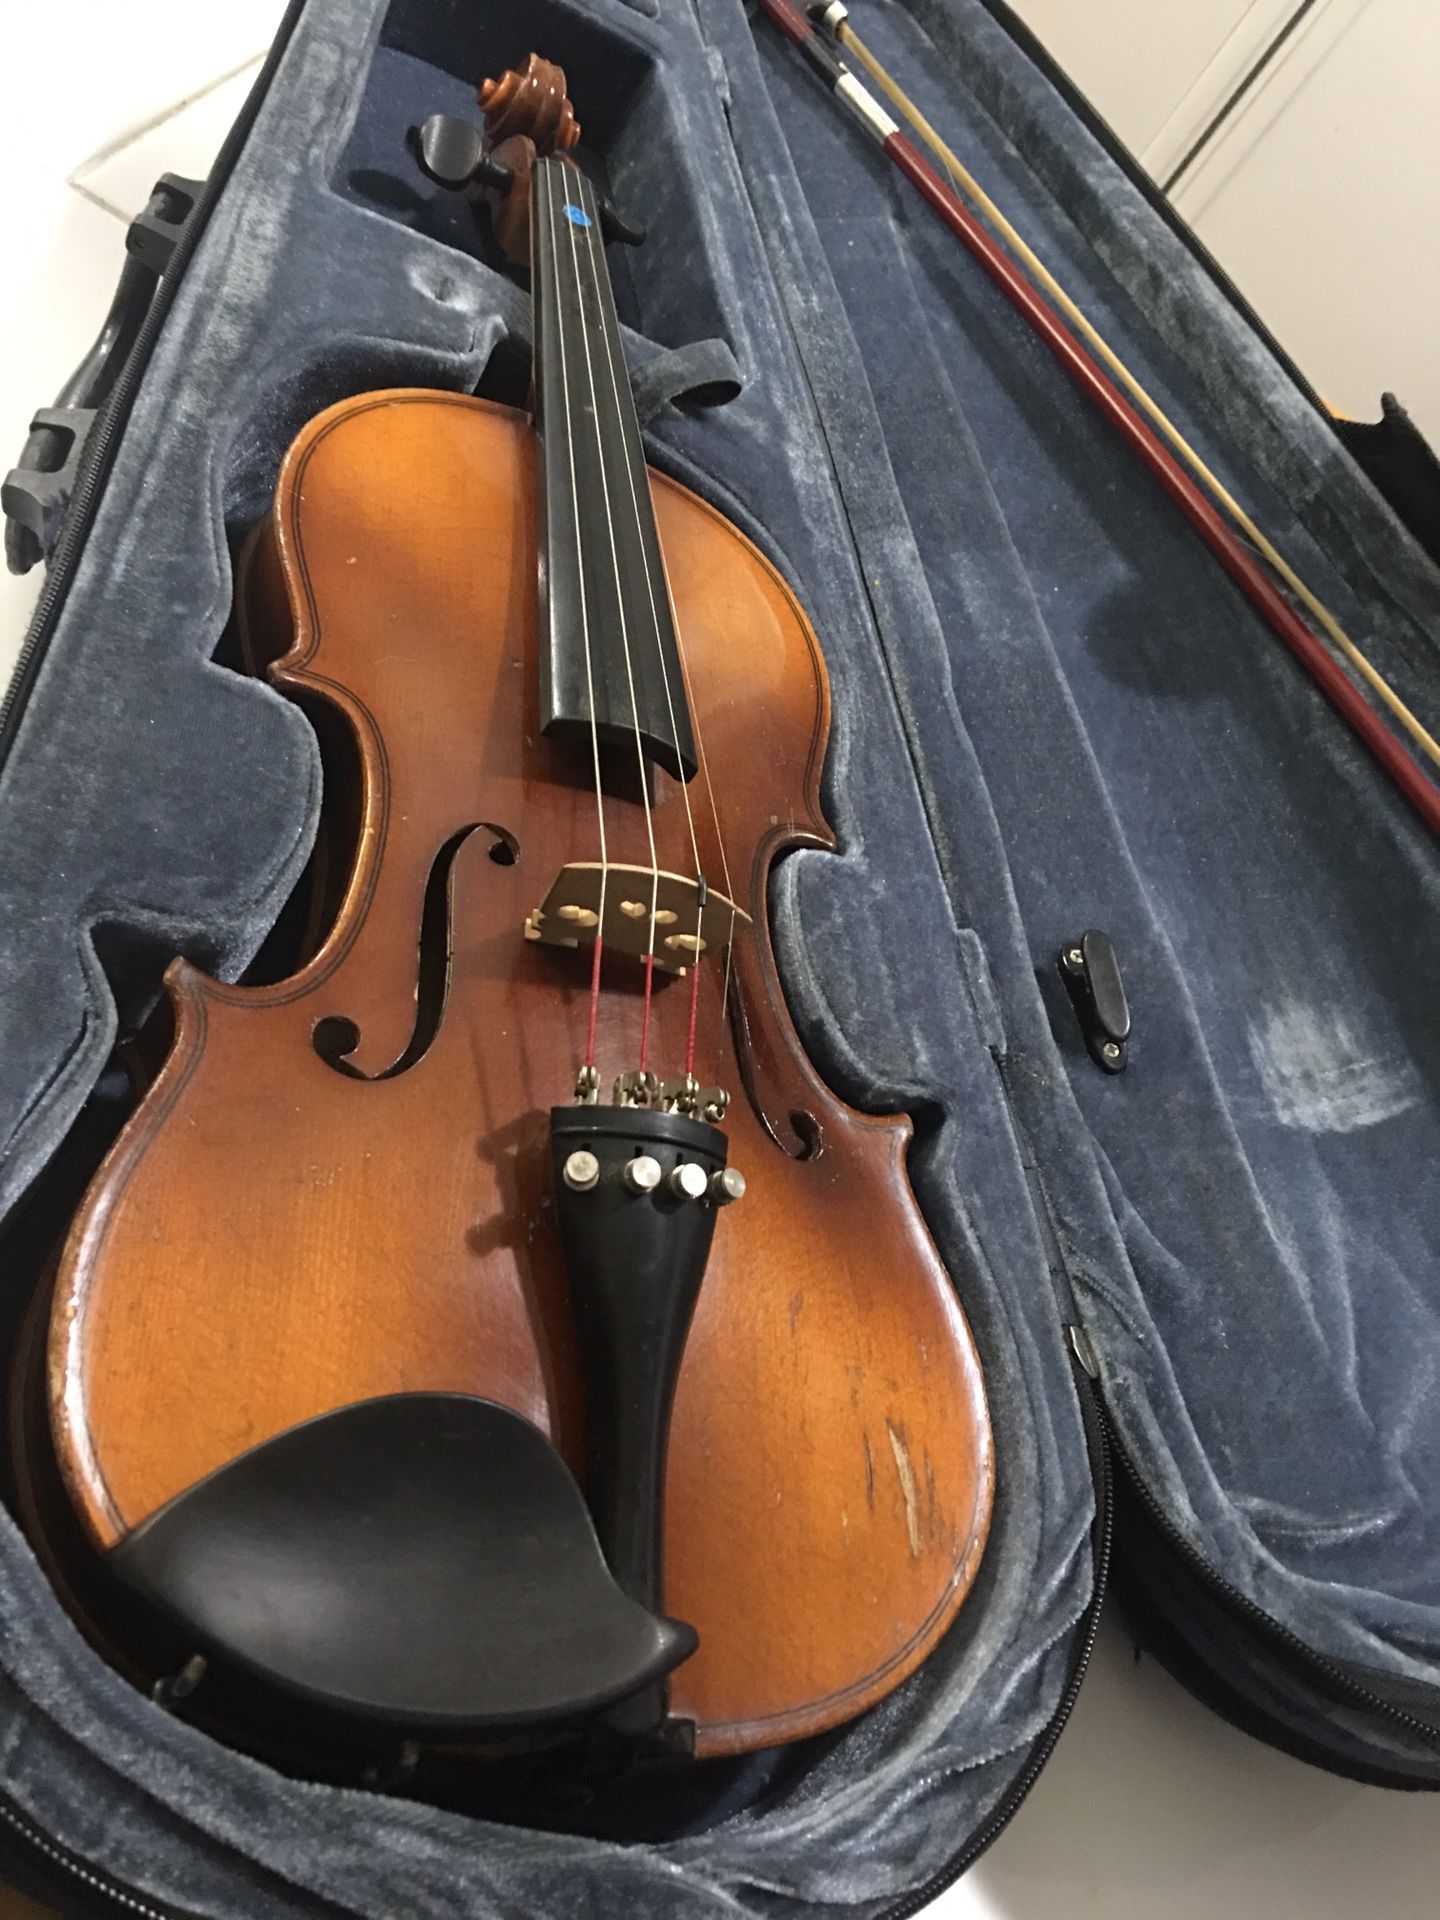 Nagaya Sazuk 220 3/4 violin with case local pick up only